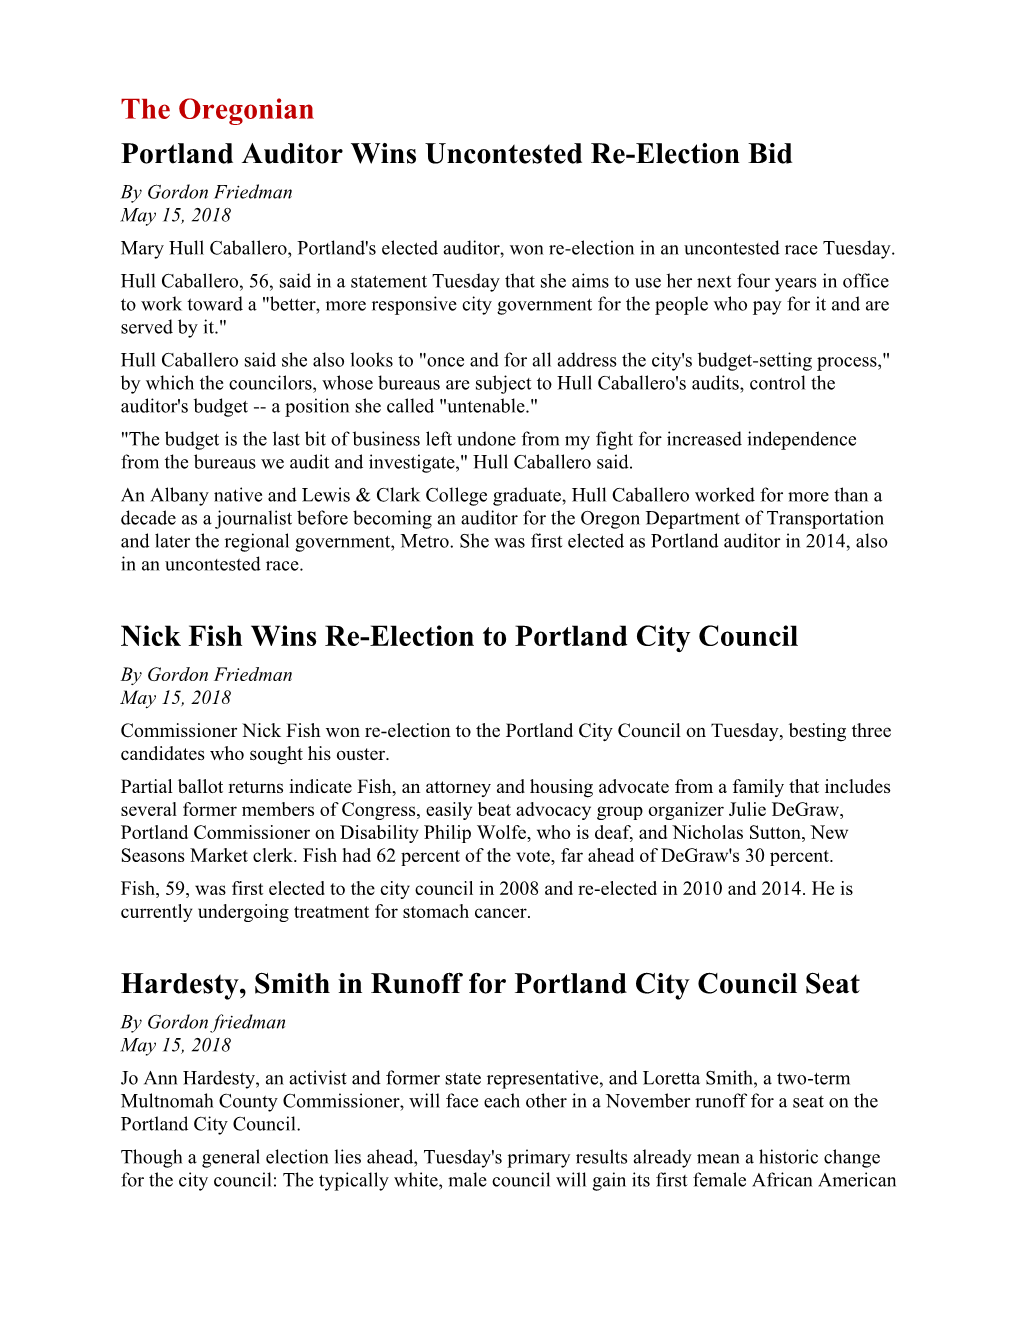 Nick Fish Wins Re-Election to Portland City Council